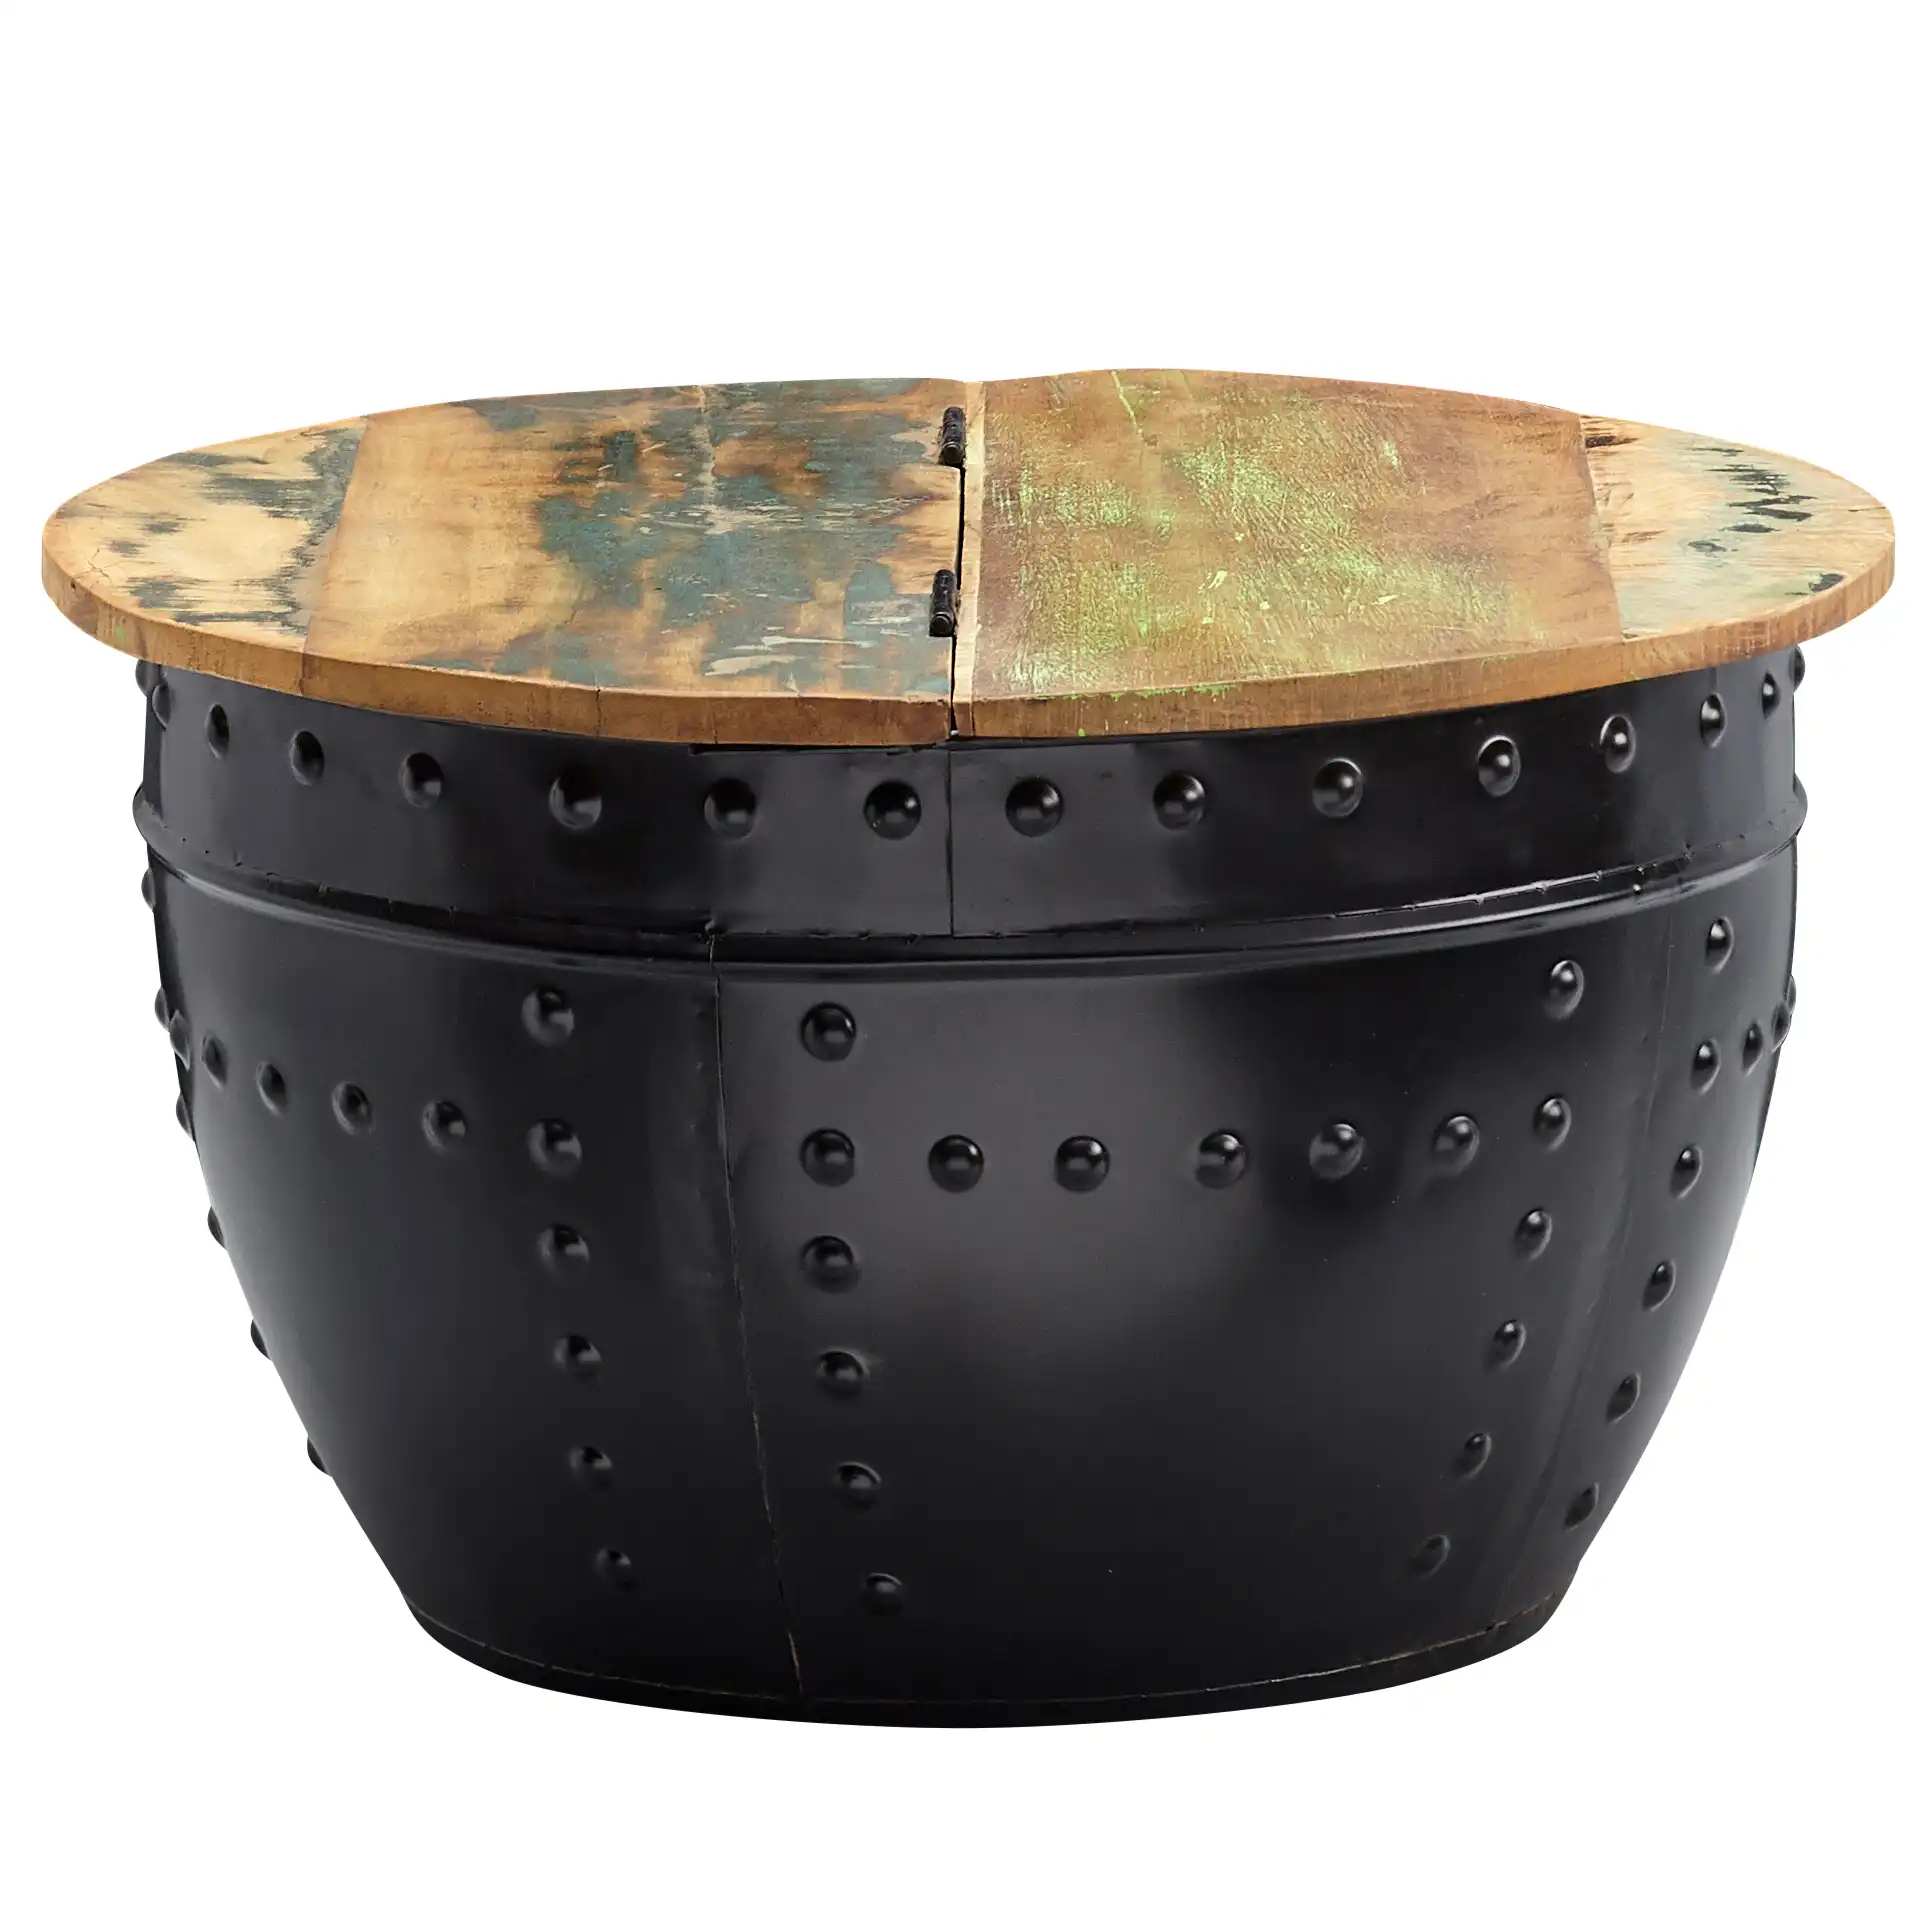 Iron Round Coffee Table with Wooden Top & Storage - Black - popular handicrafts